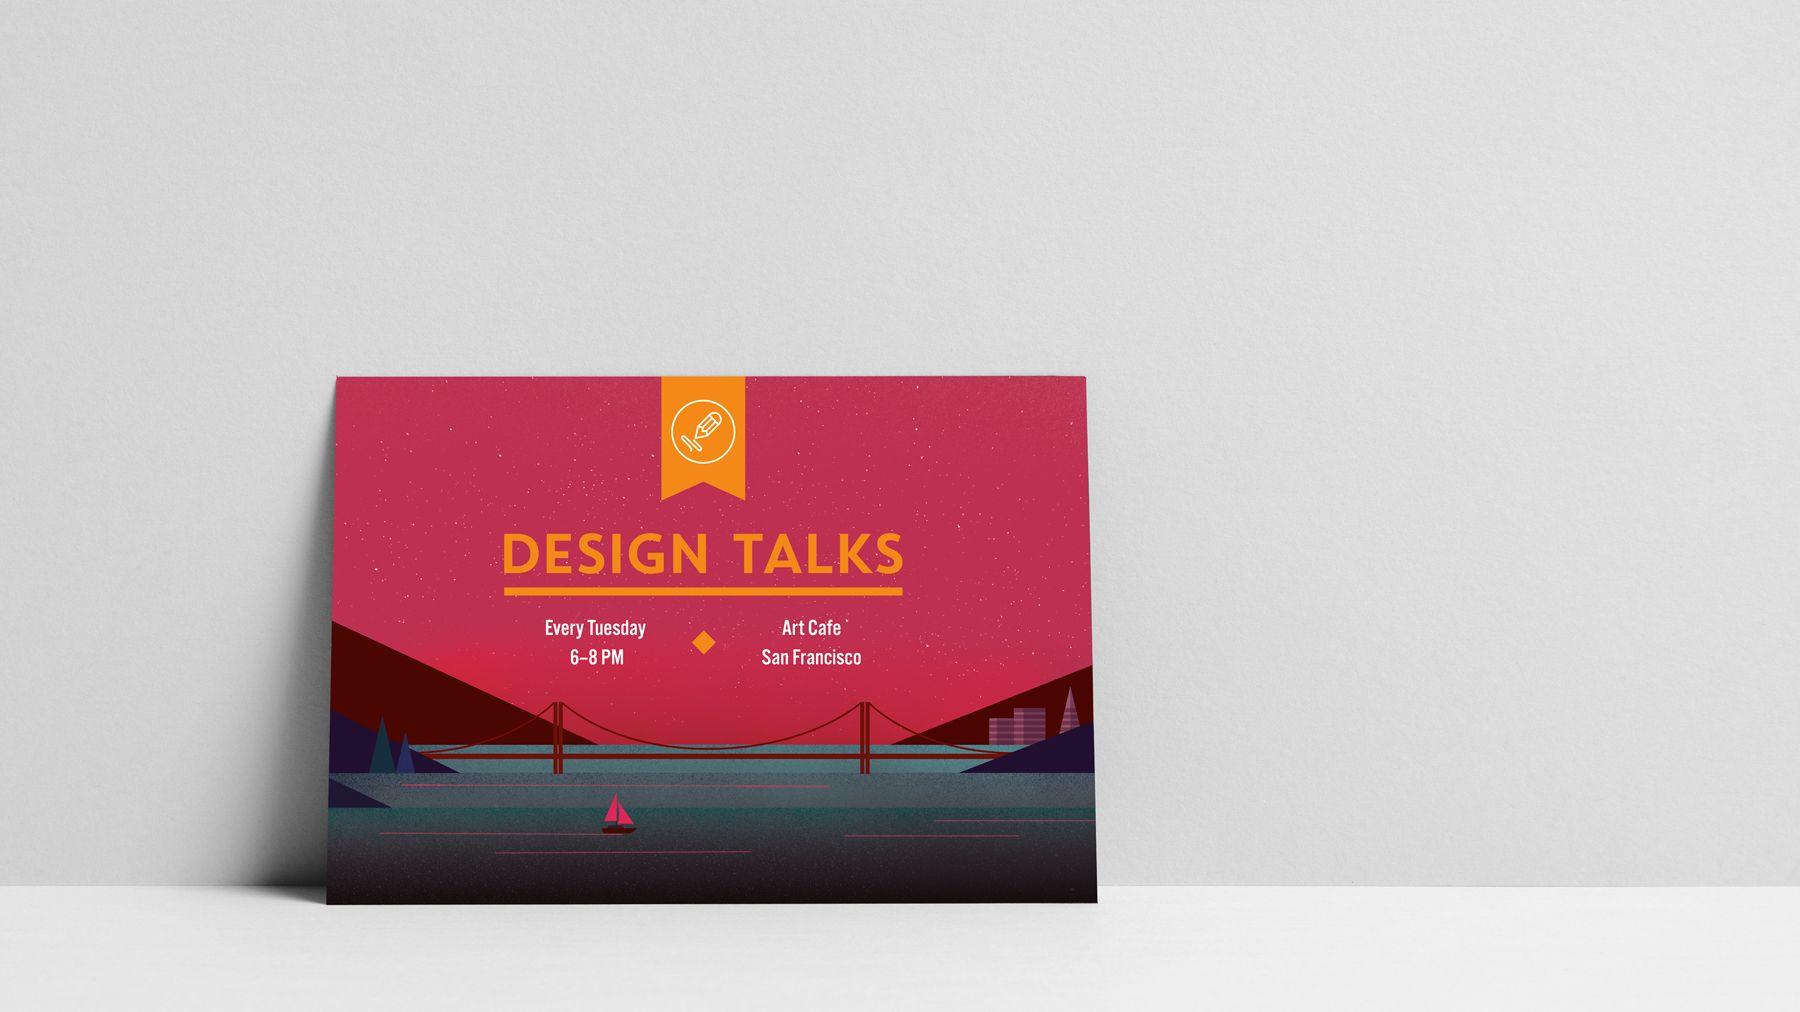 Adobe InDesign Logo - Create a postcard in InDesign | Adobe InDesign CC tutorials